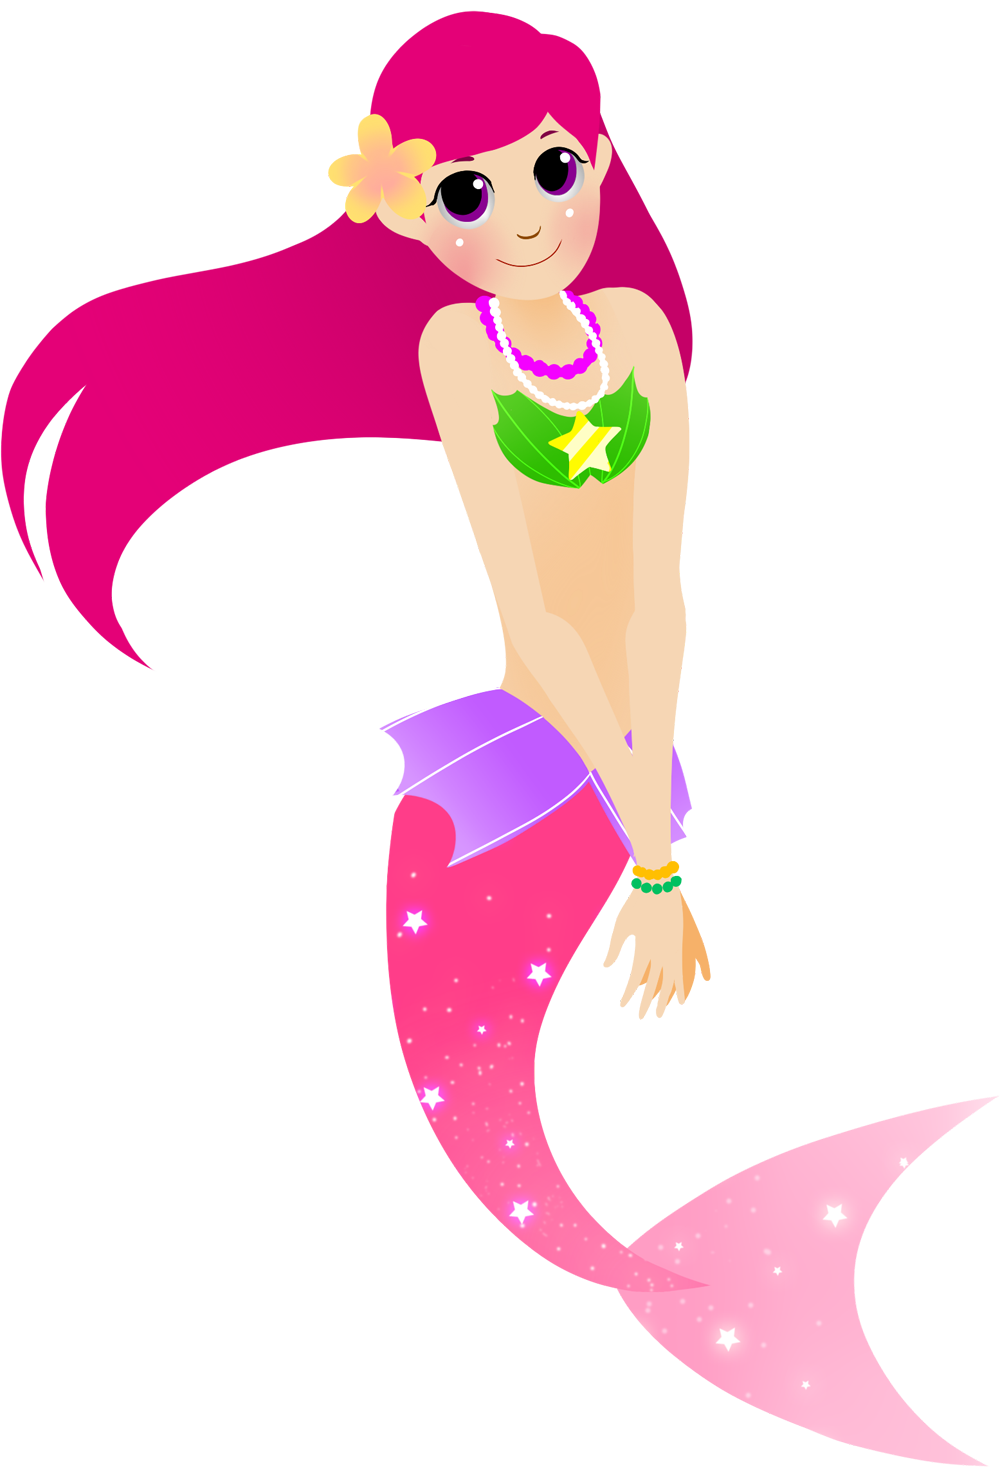 Mermaid clip art free vector image 